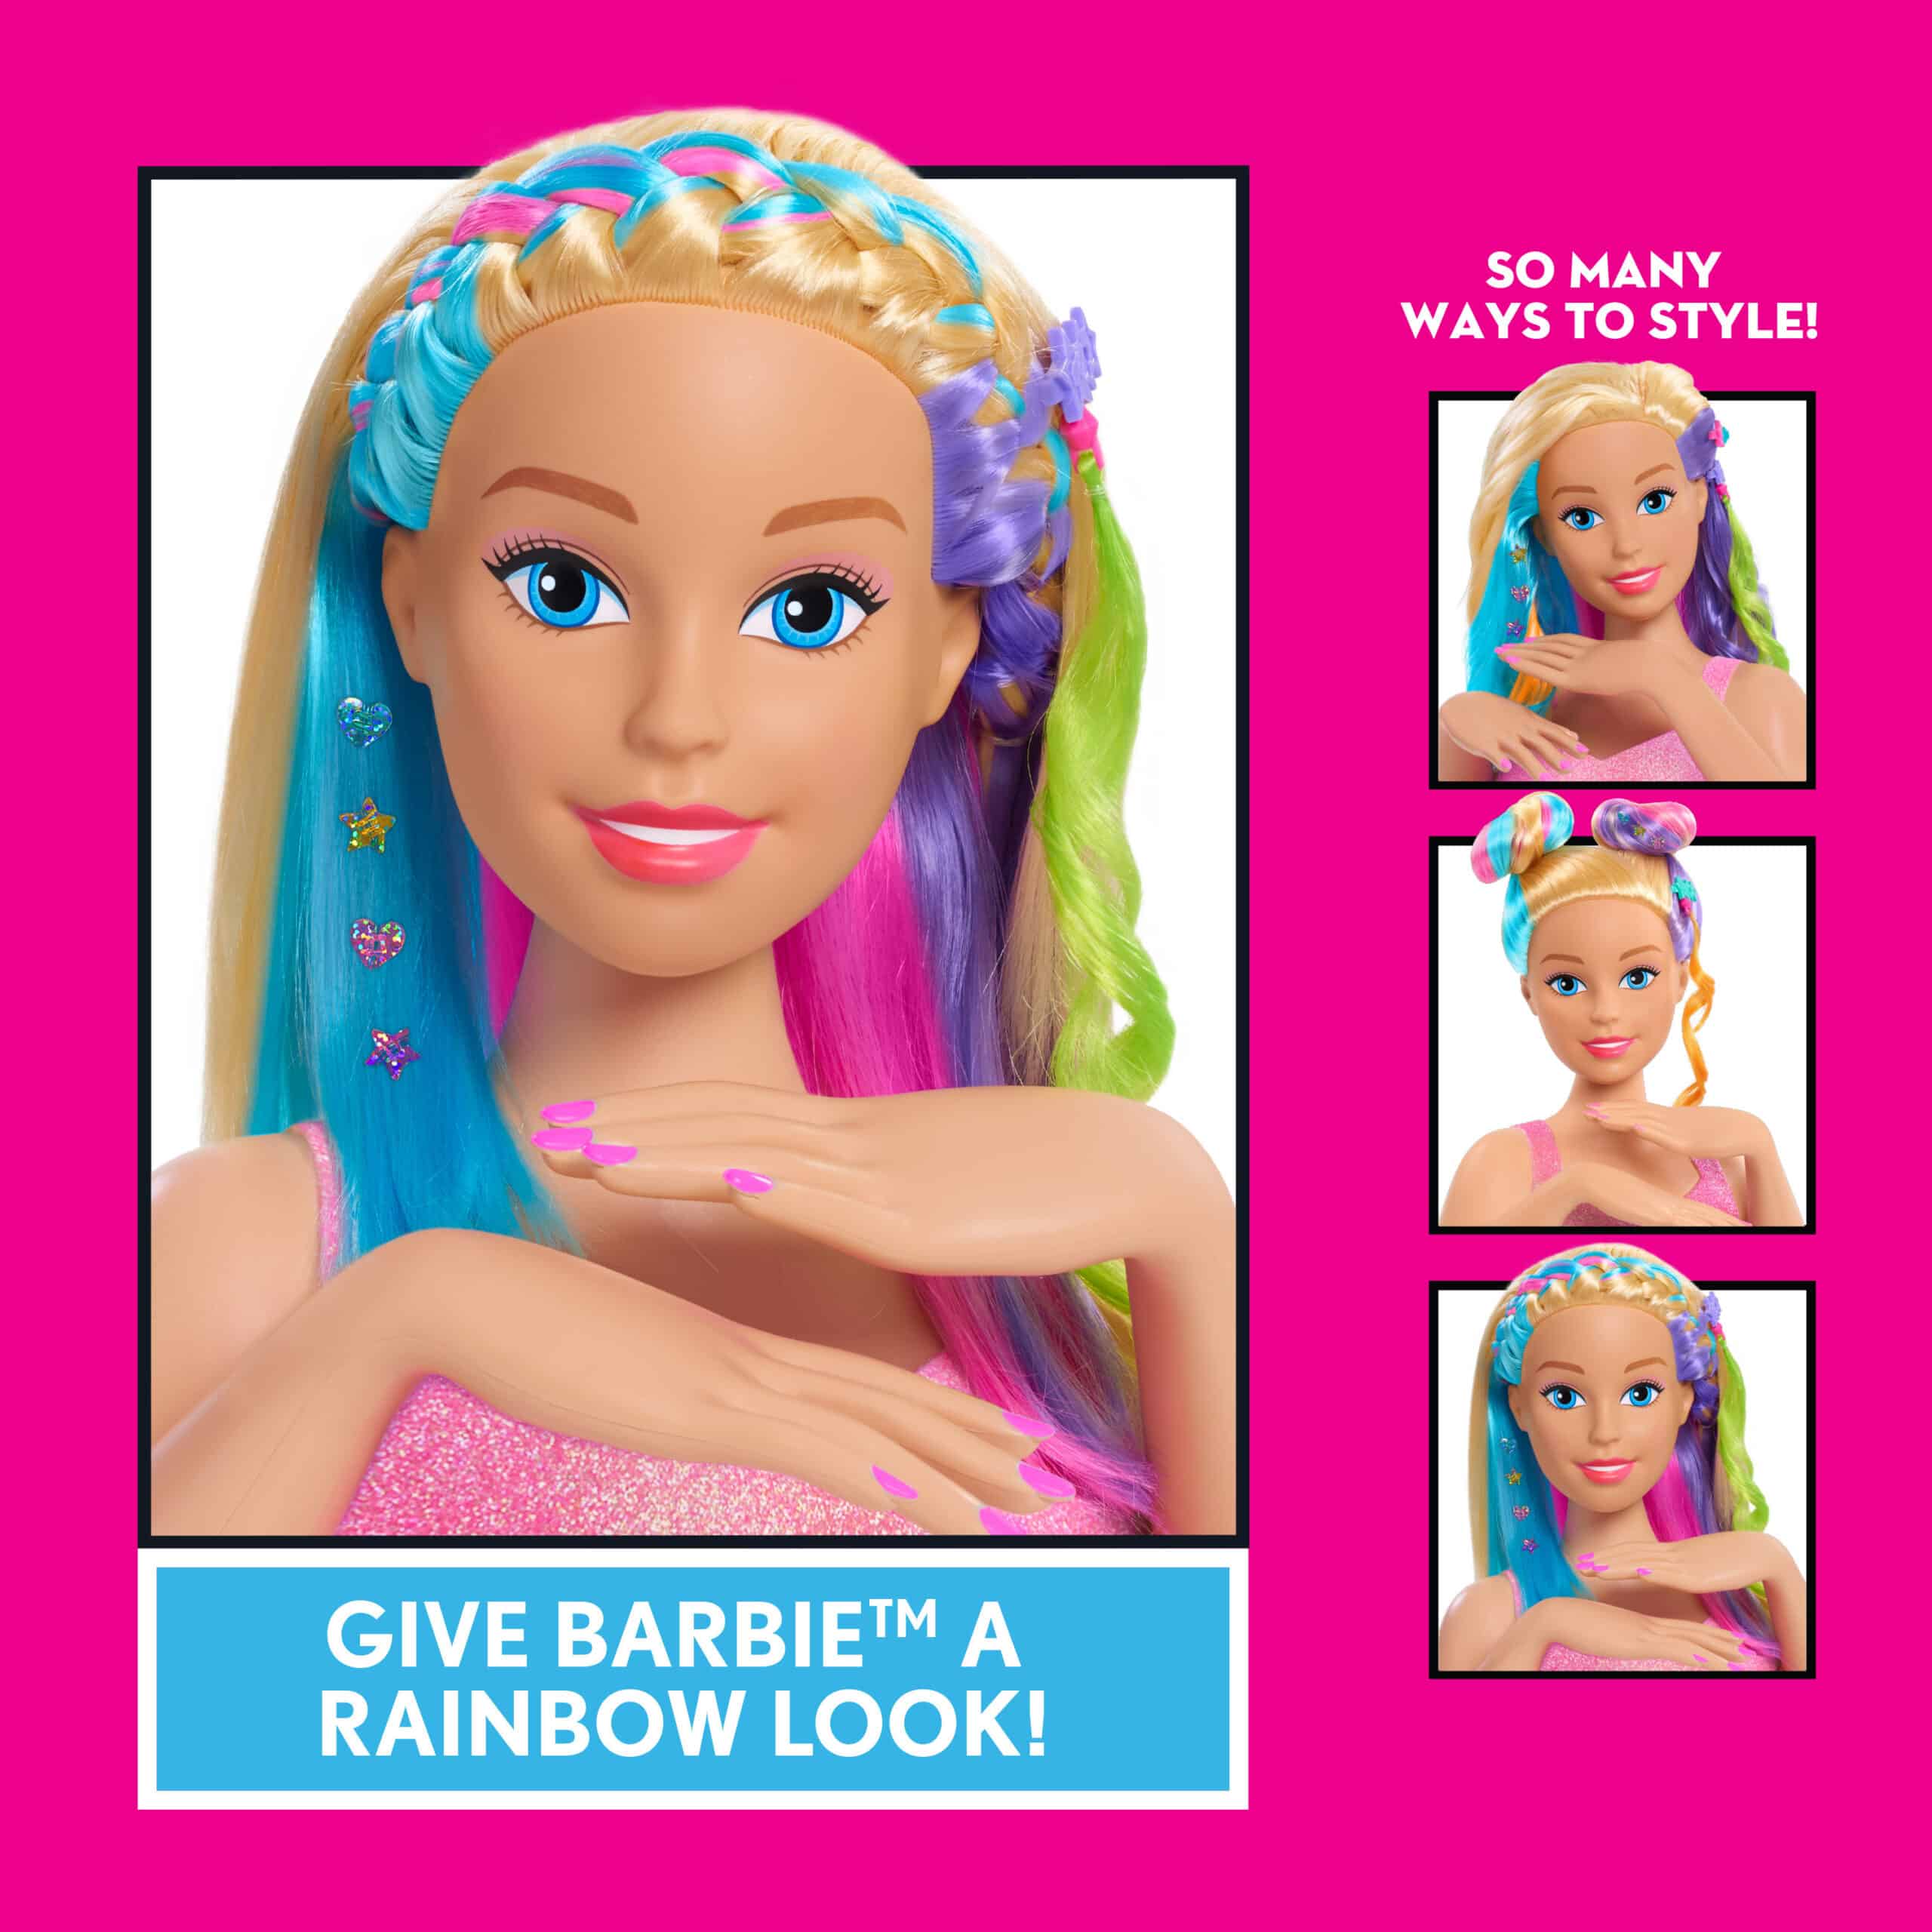 Barbie  - Rainbow Sparkle - Deluxe Styling Head